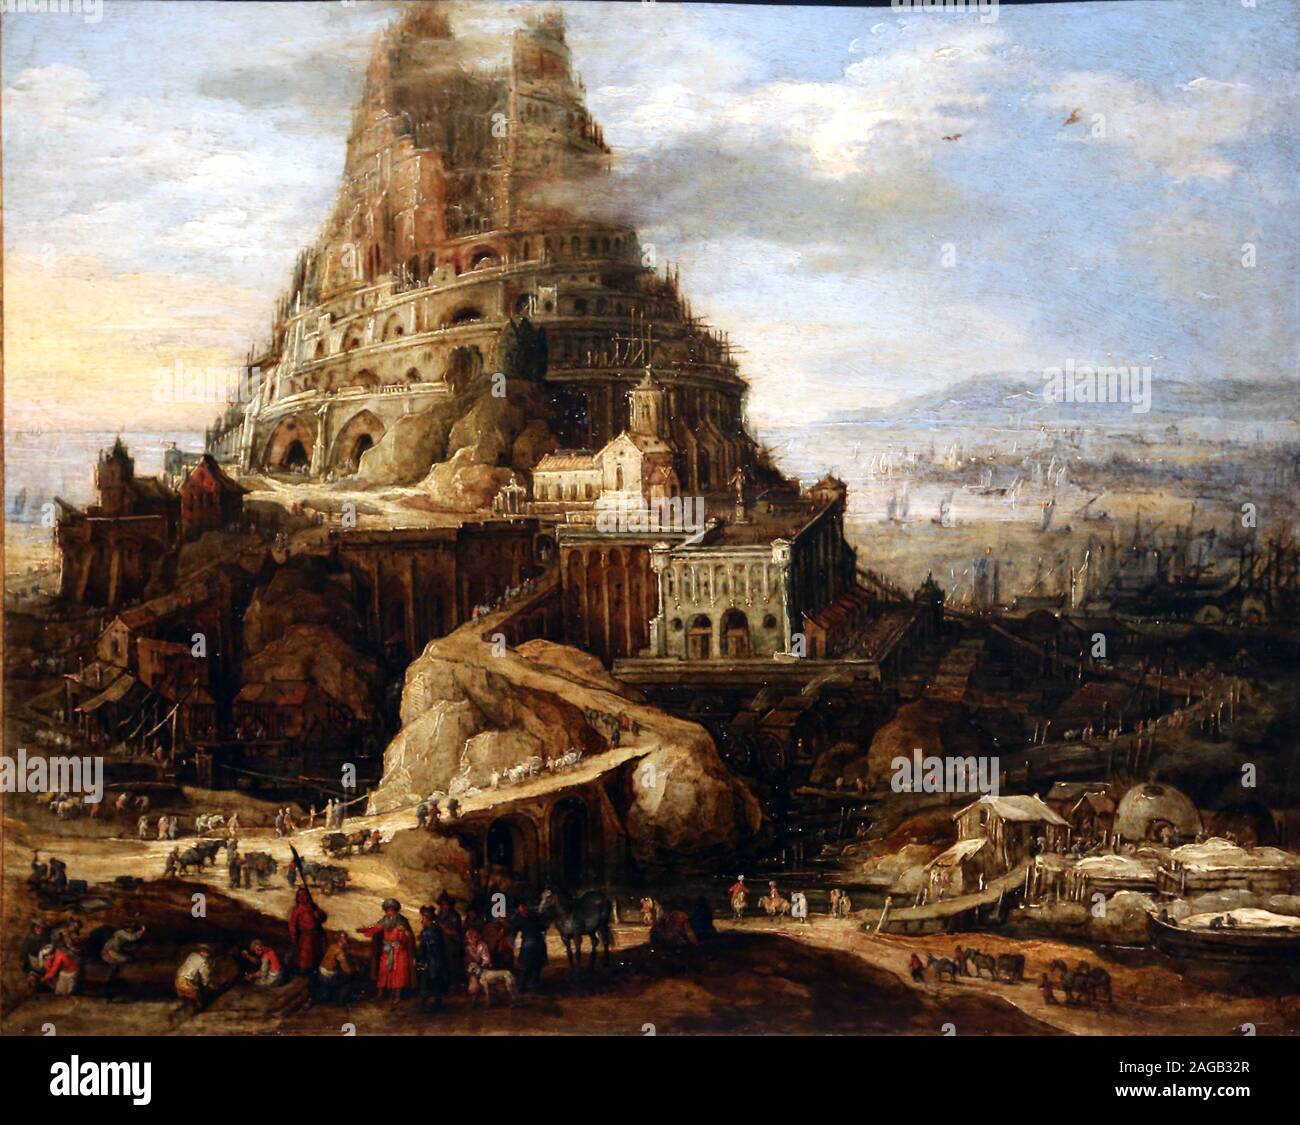 Turm von Babel, Öl auf Kupfer. C1600. Joos de Monper, der Jüngere (1564-1635) Atrib. Museu Nacional de Arte Antiga, Lissabon, Portugal. Stockfoto